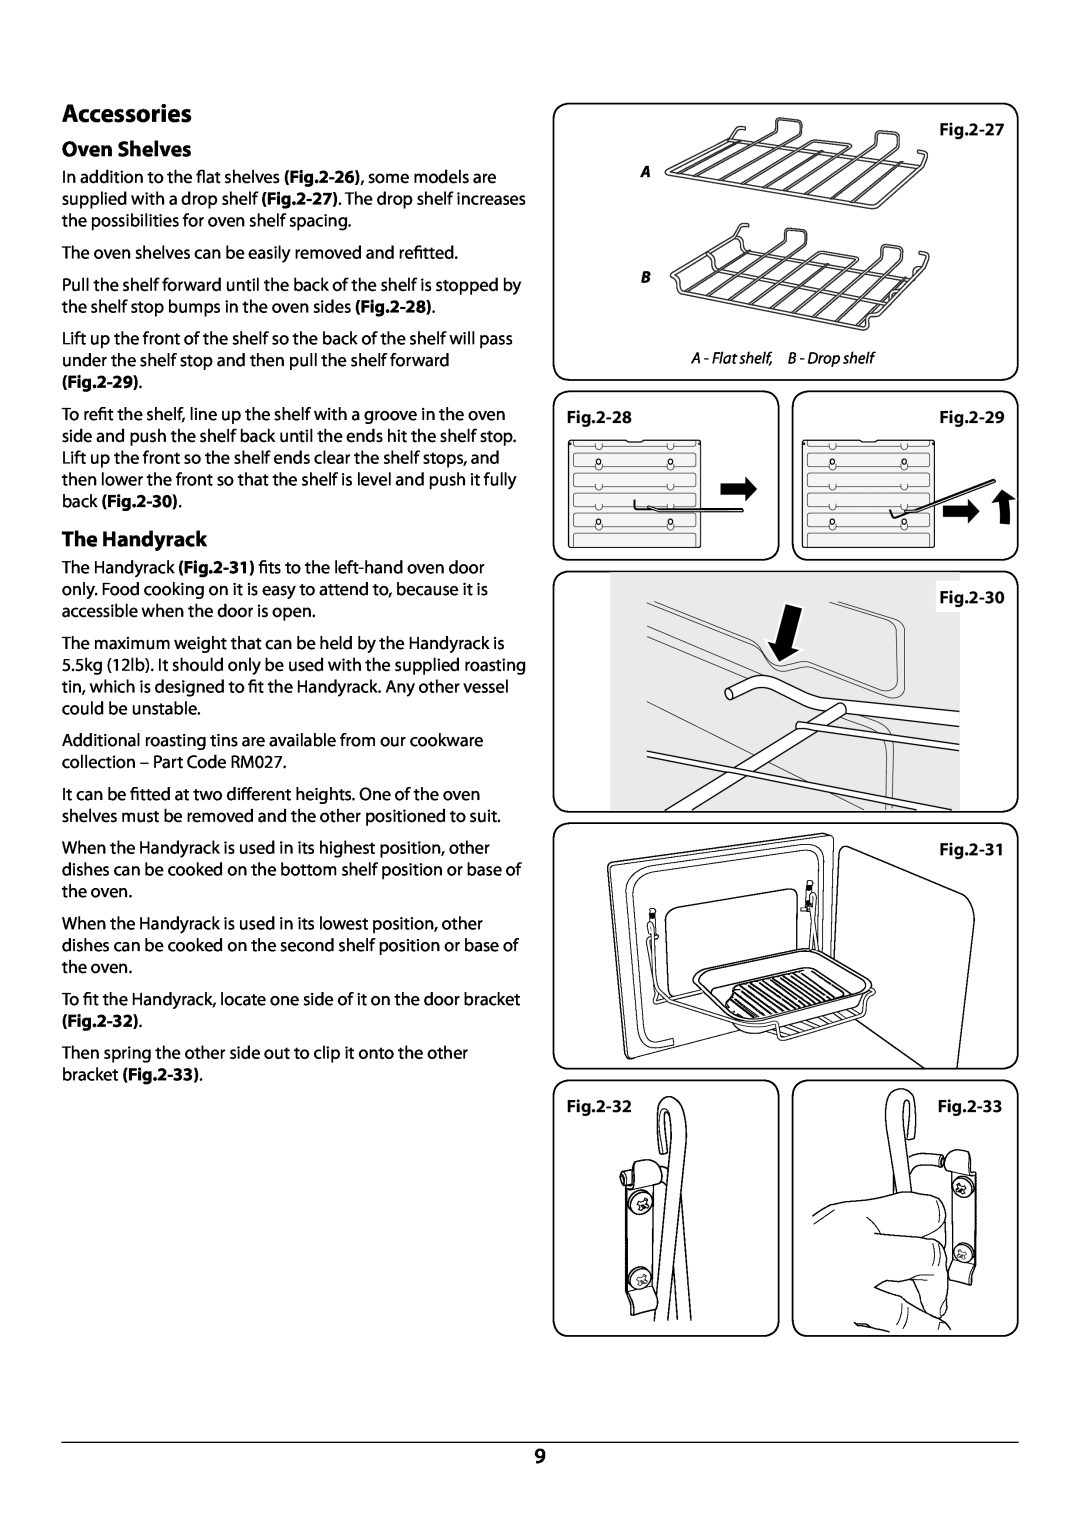 Rangemaster U109948 - 04 manual Accessories, Oven Shelves, The Handyrack 